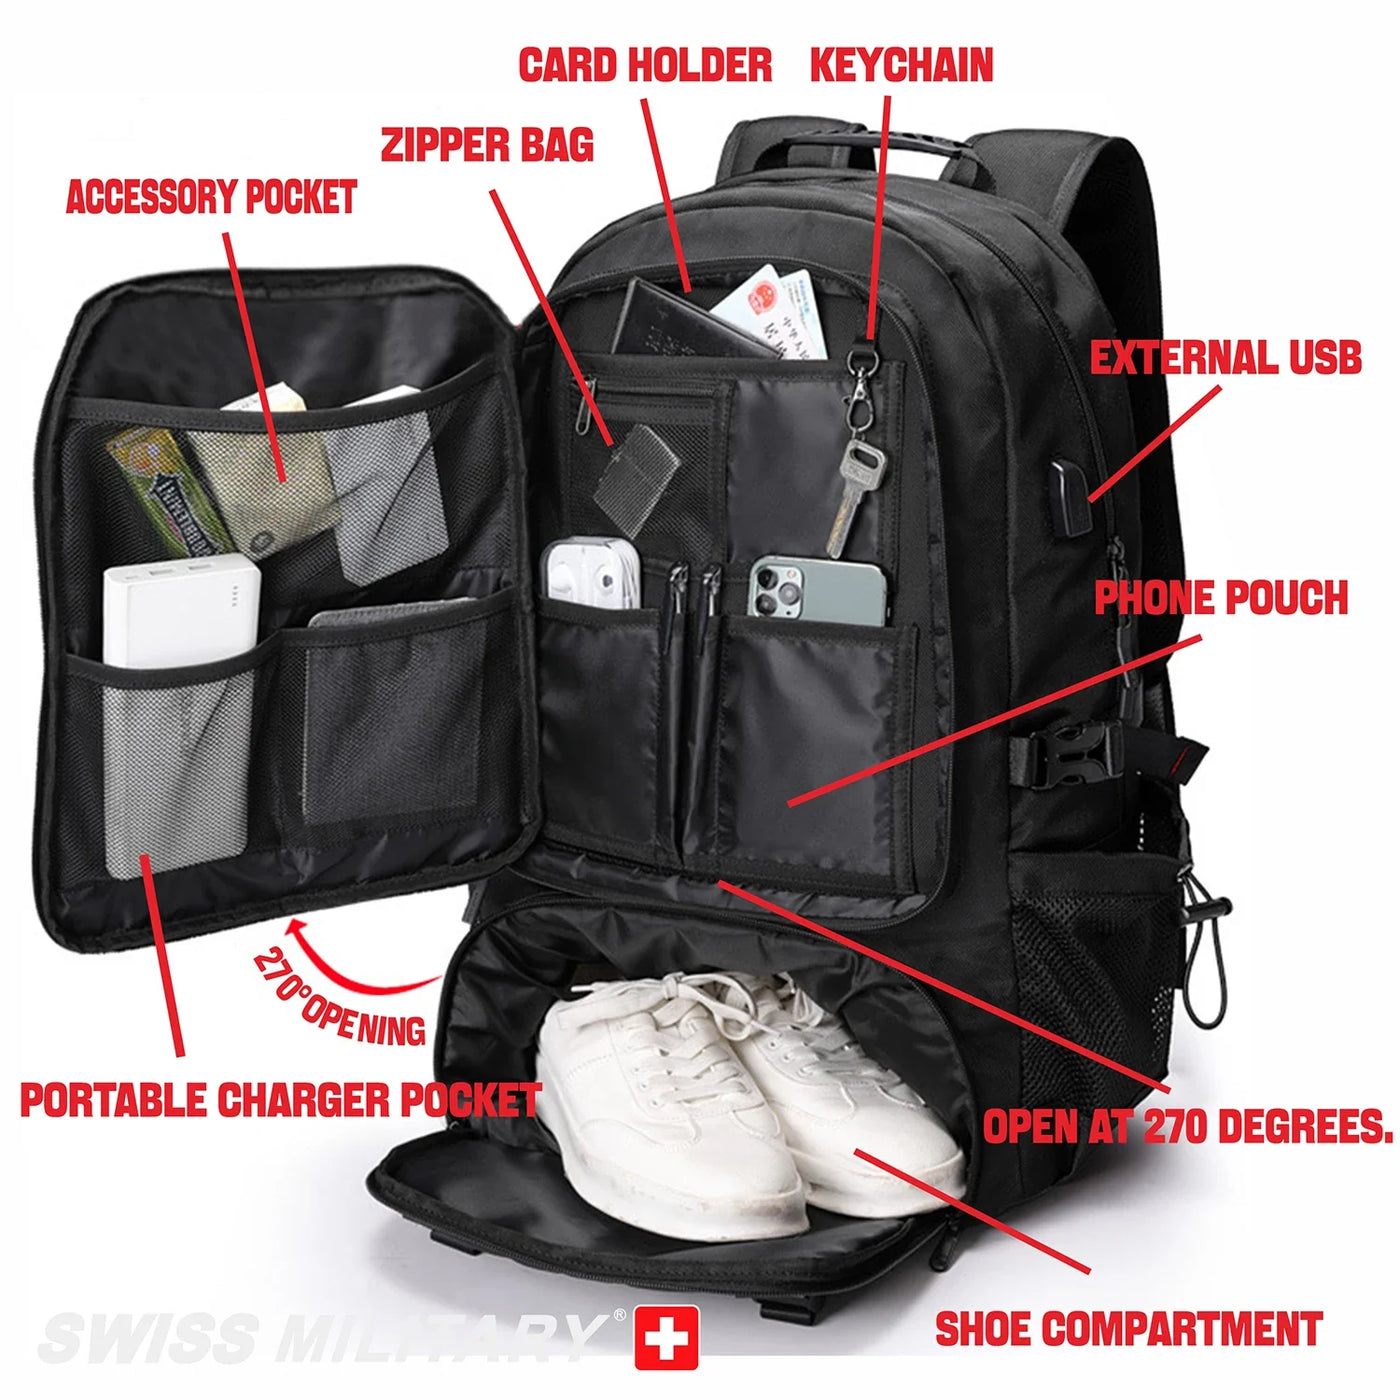 Swiss Military Classic Nylon Backpack for Men - Steffashion